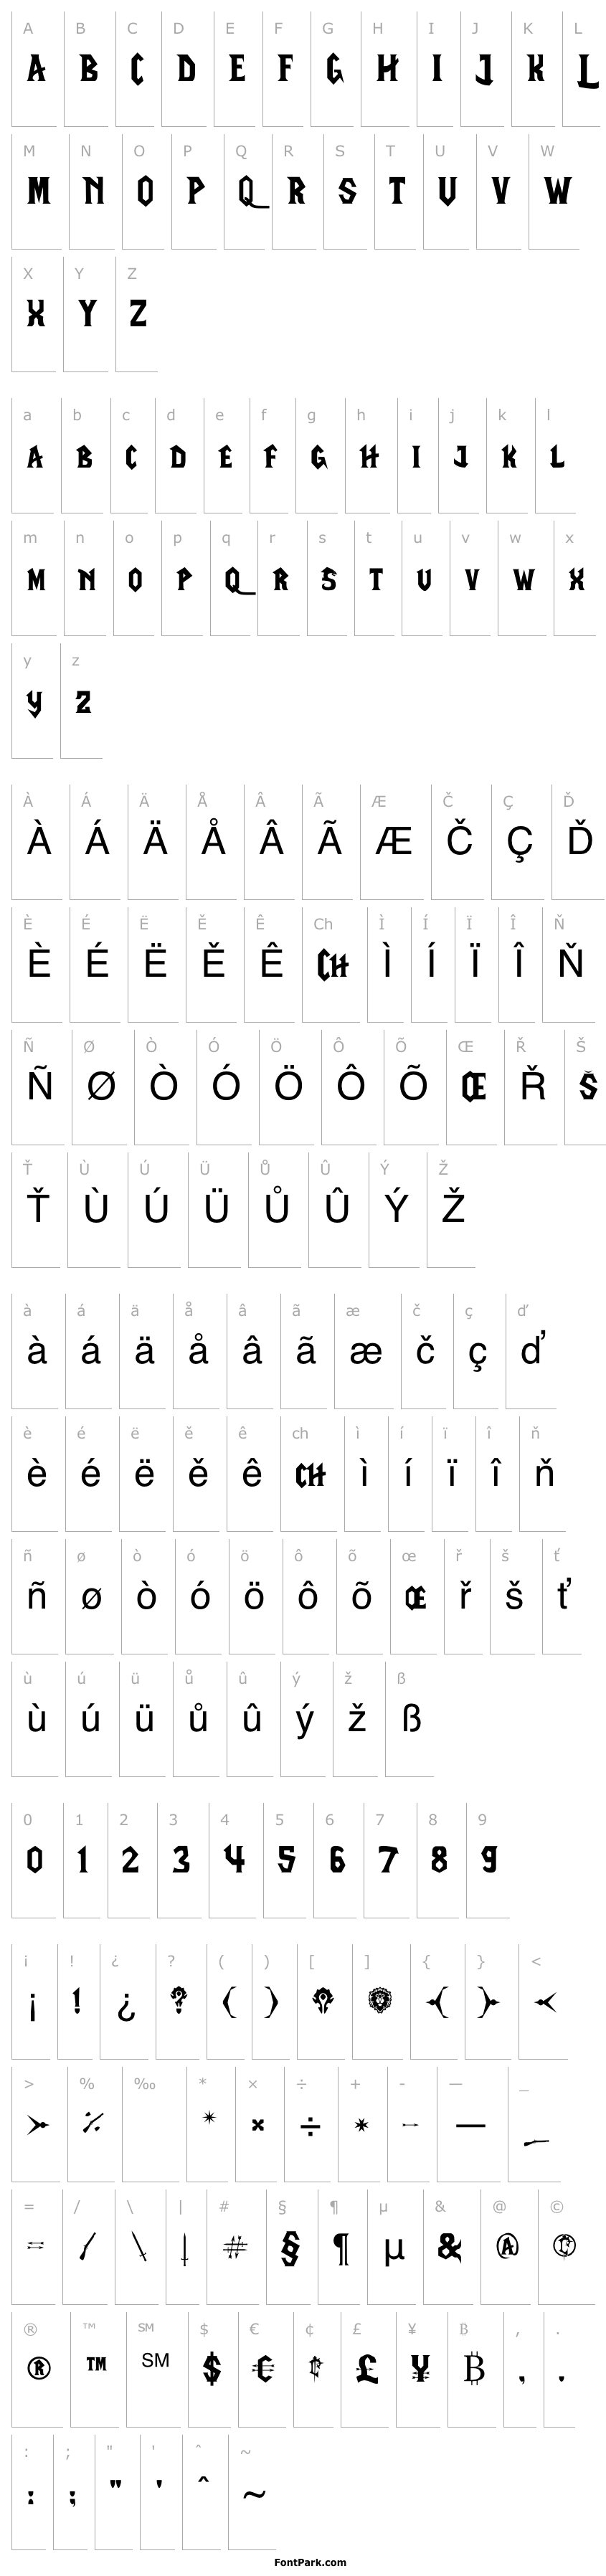 lifecraft font download